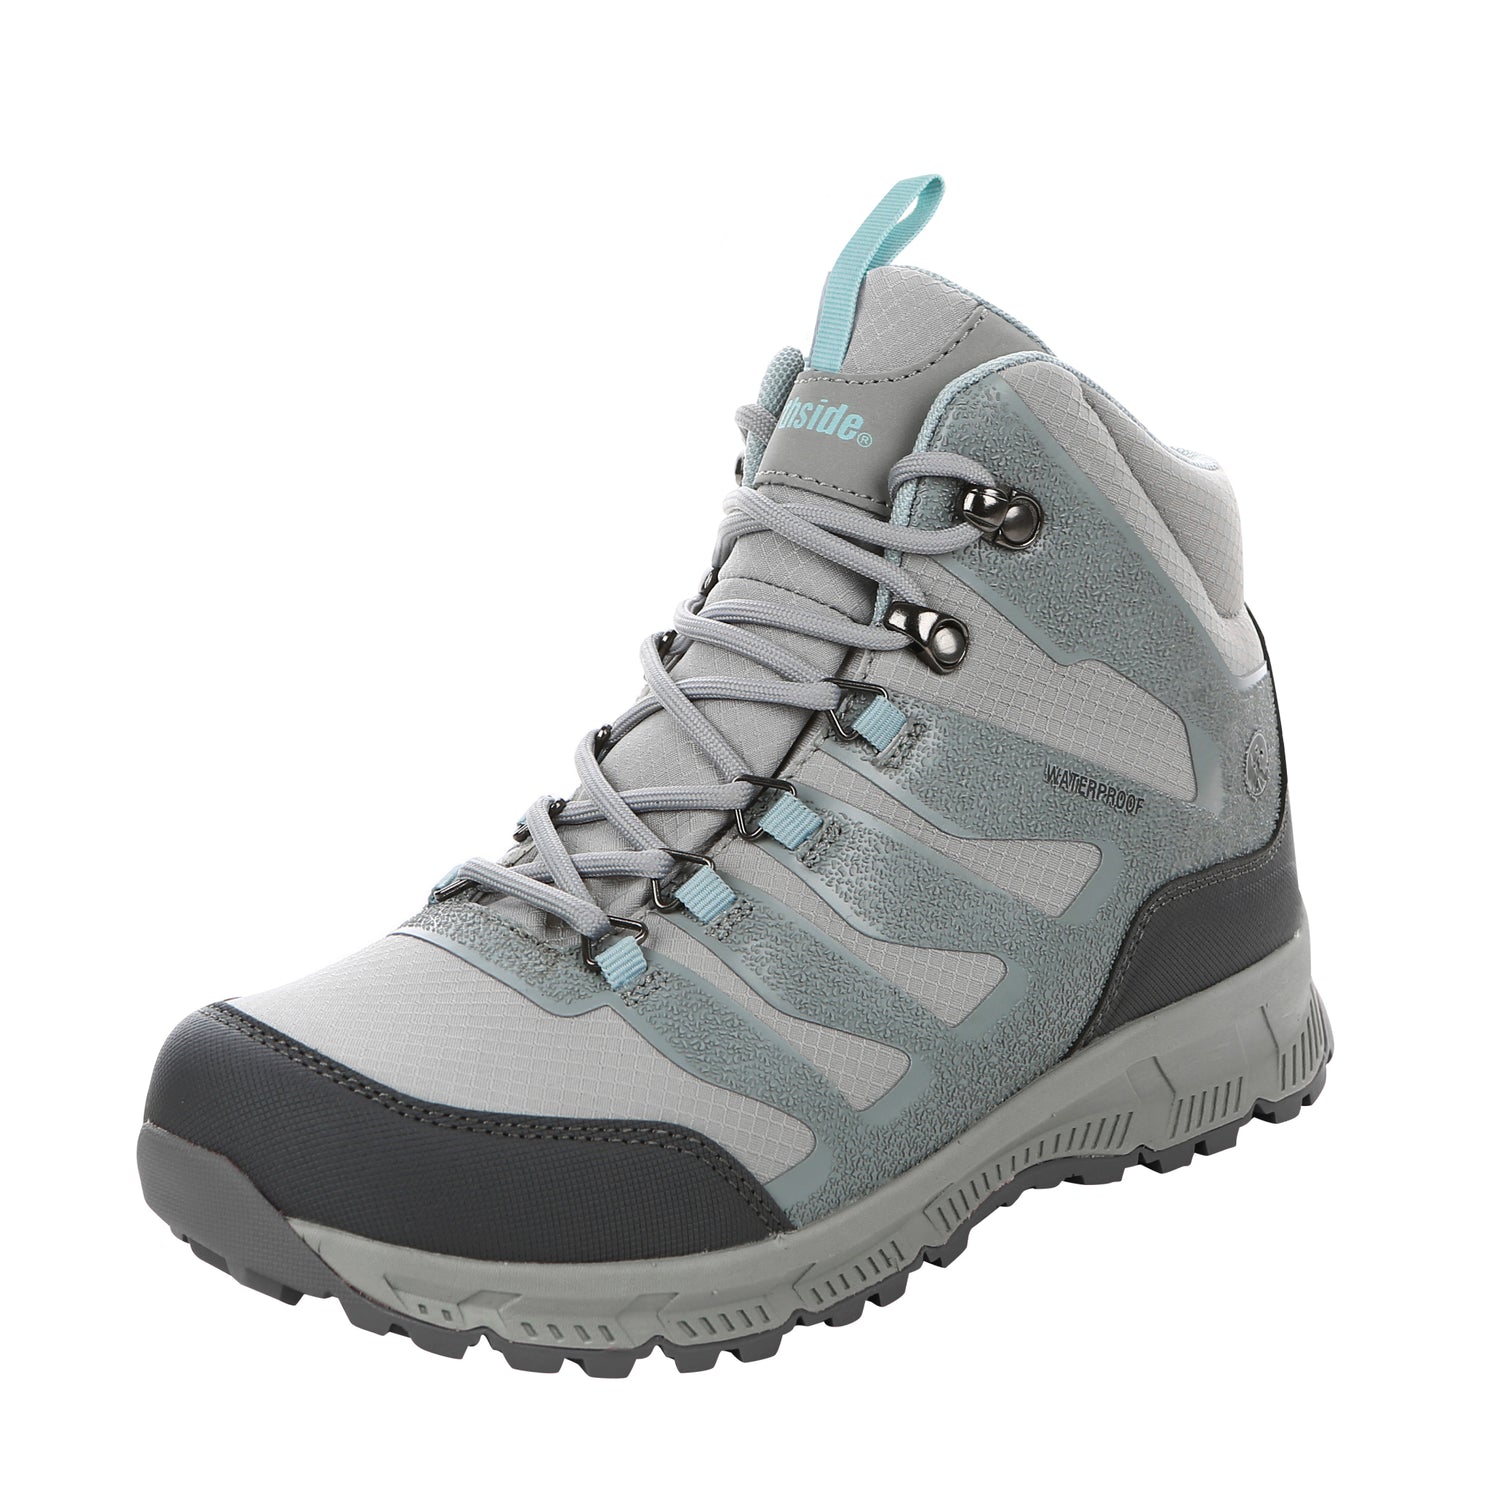 Northside Woman's Hargrove Mid Waterproof Hiking Boots